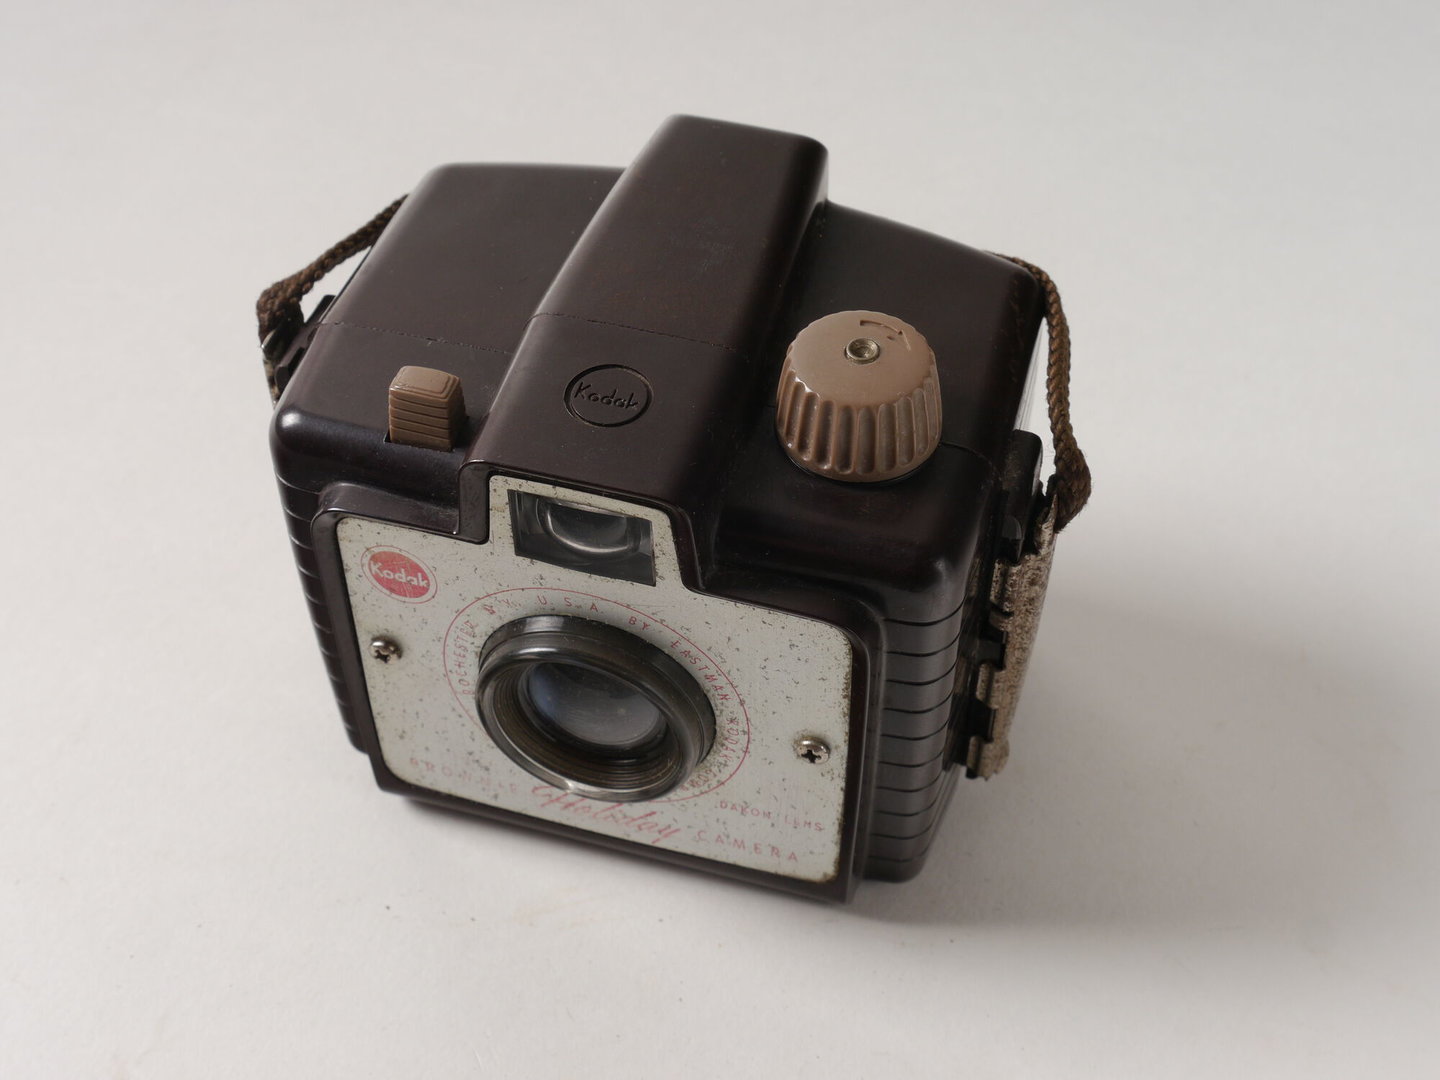 Fototoestel van het merk Kodak